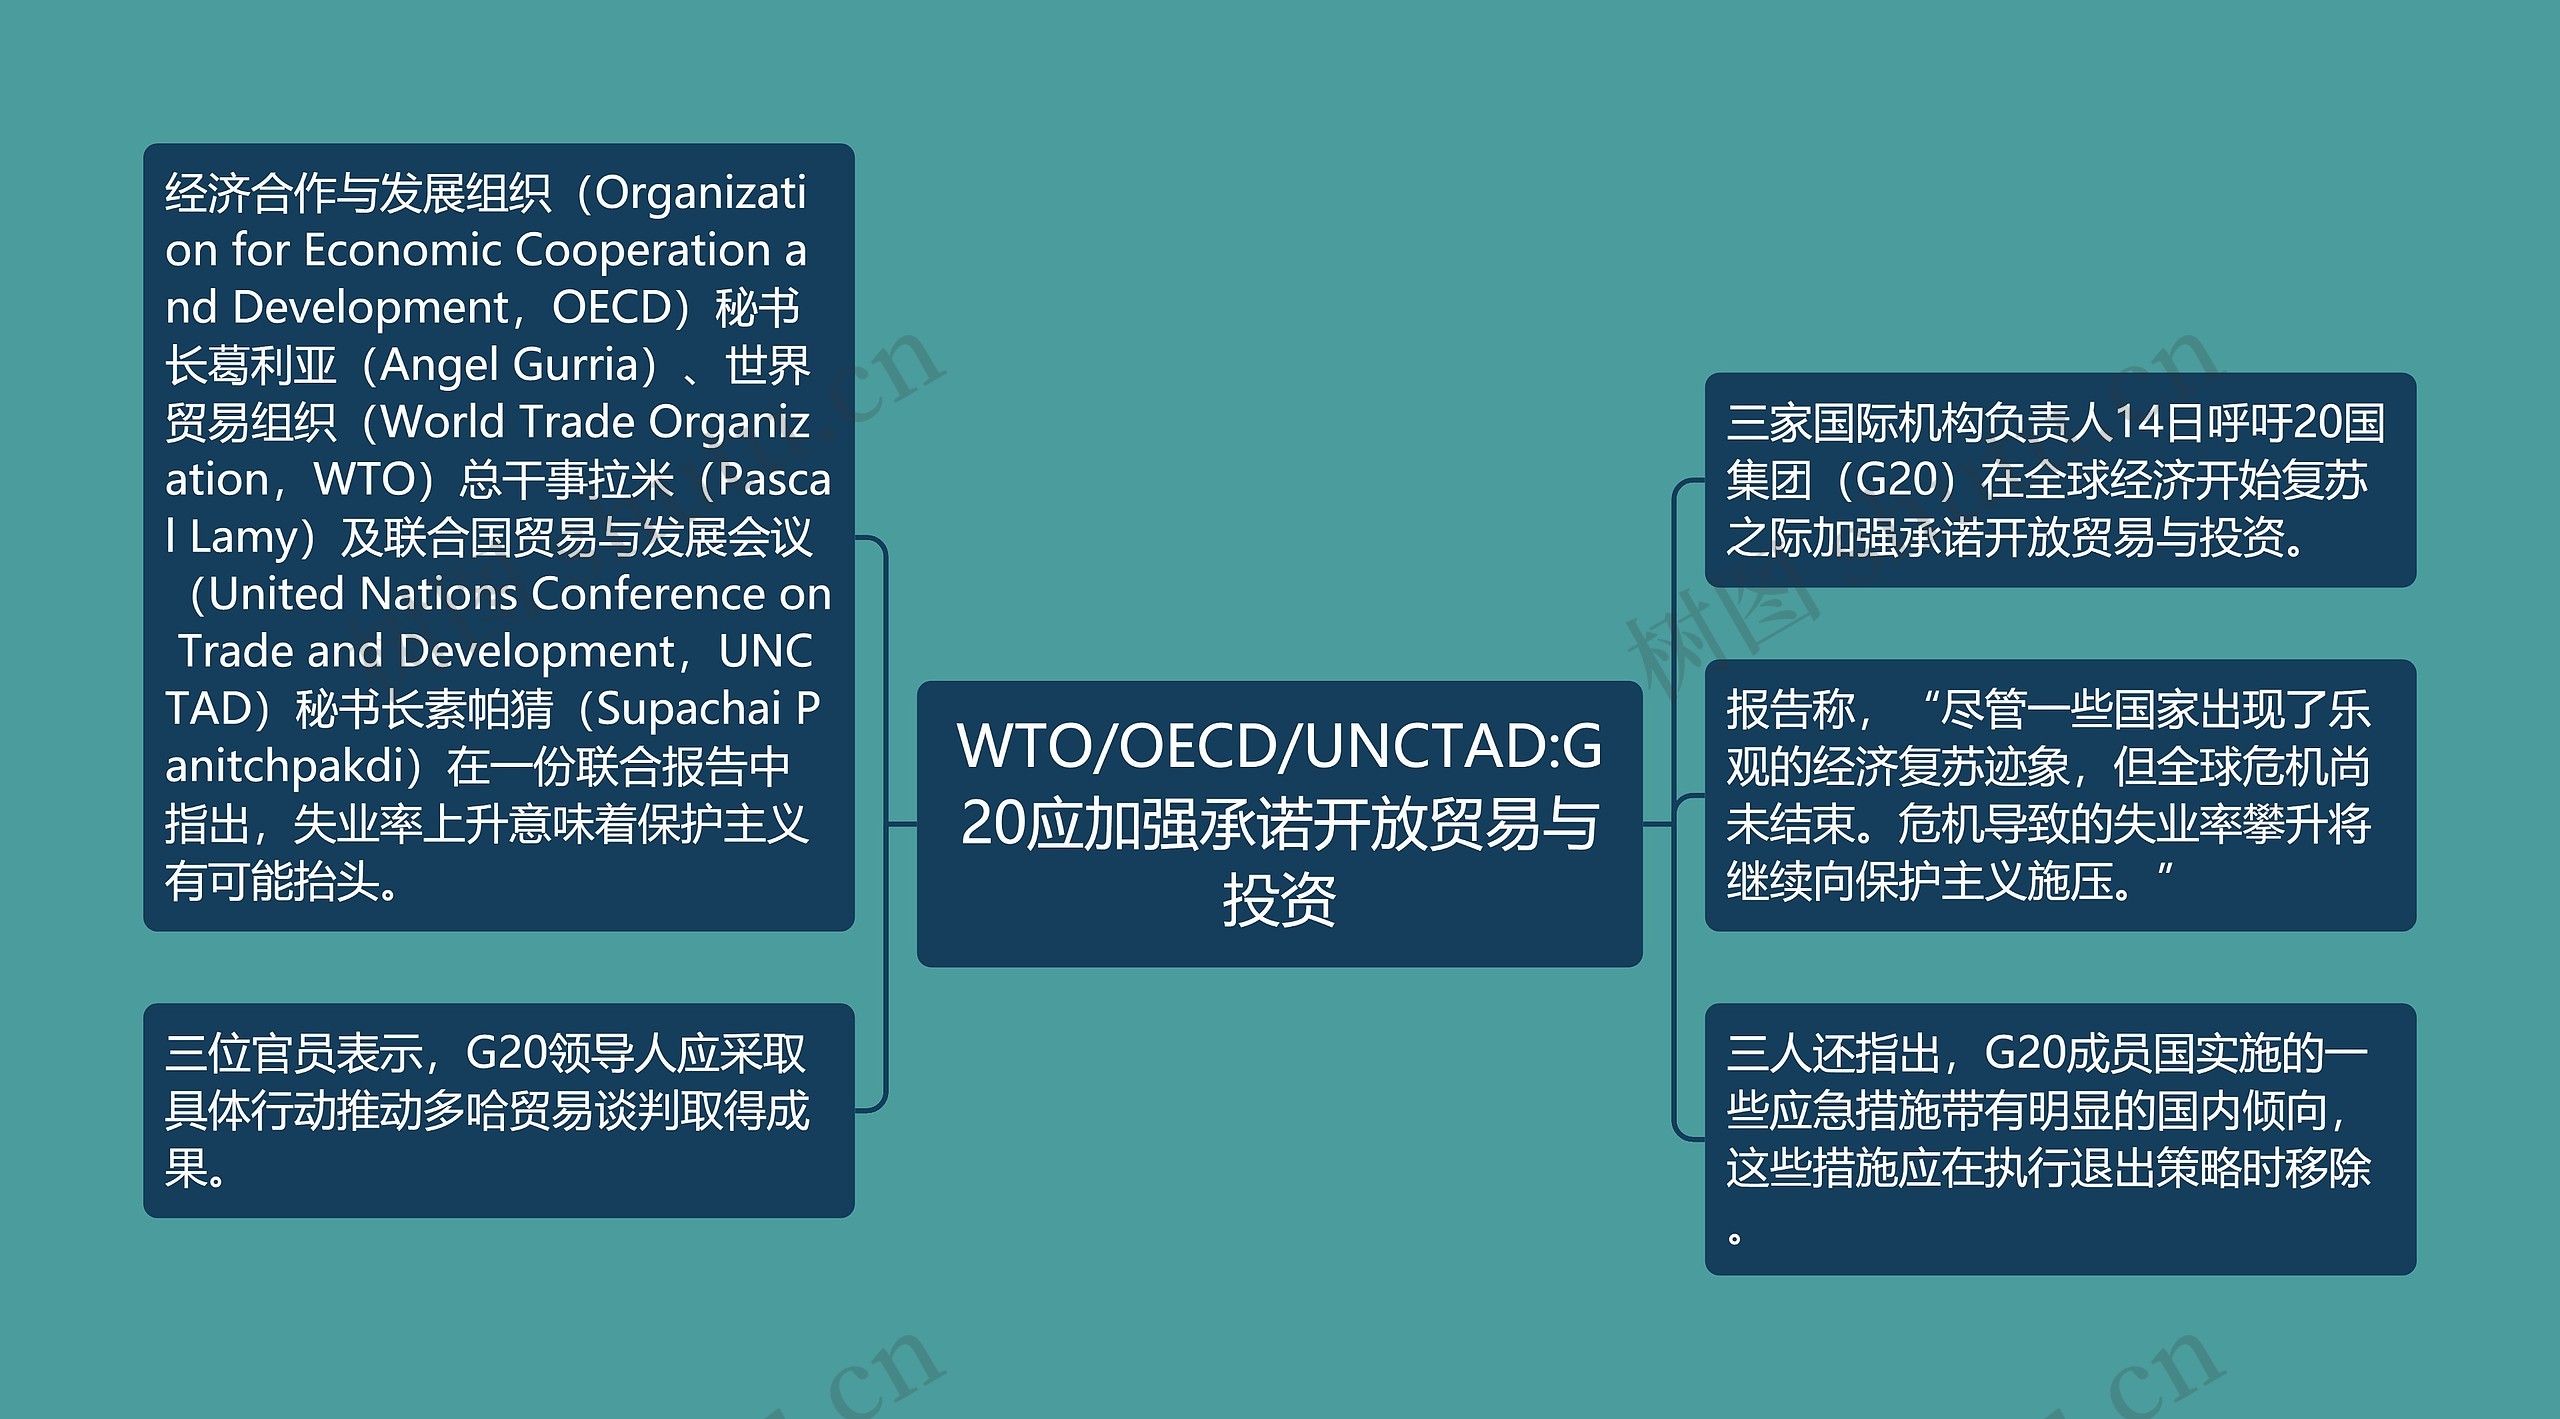 WTO/OECD/UNCTAD:G20应加强承诺开放贸易与投资